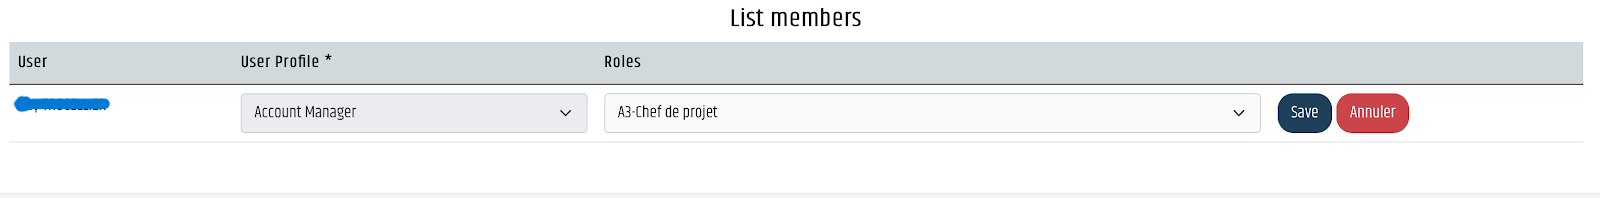 List Member - display role column